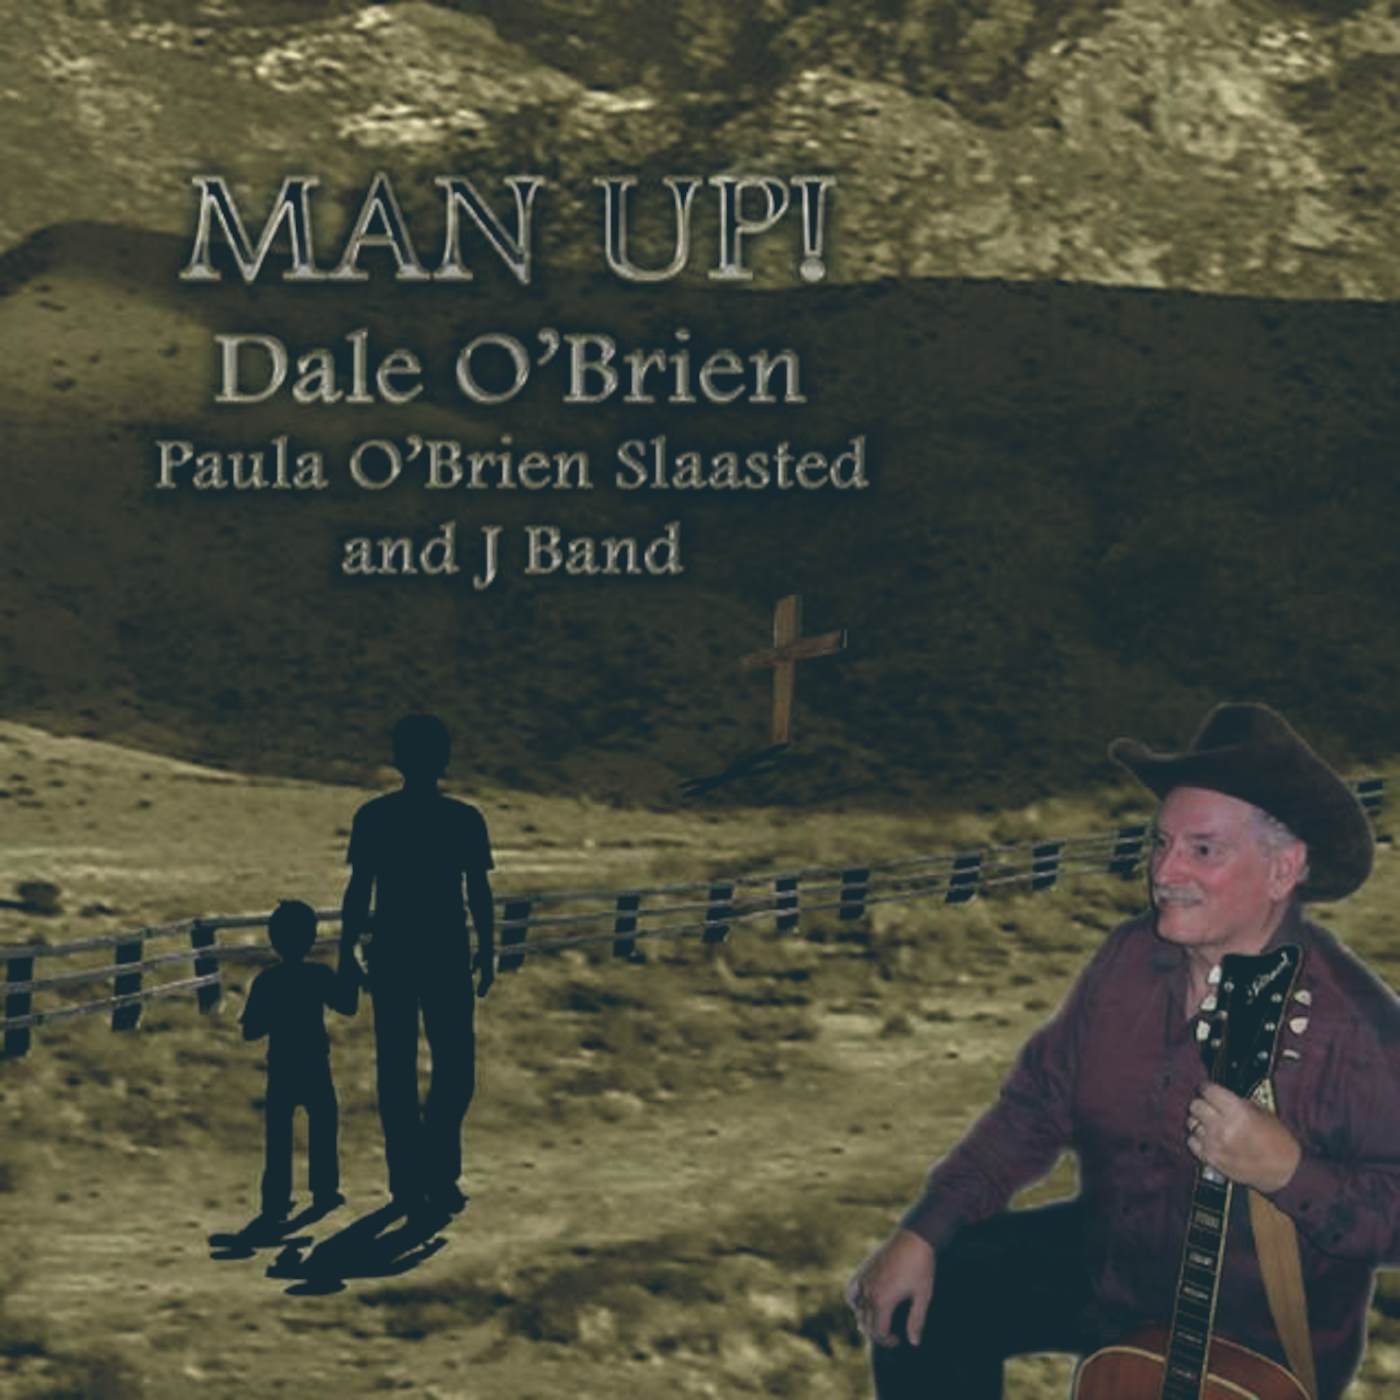 Dale O'Brien